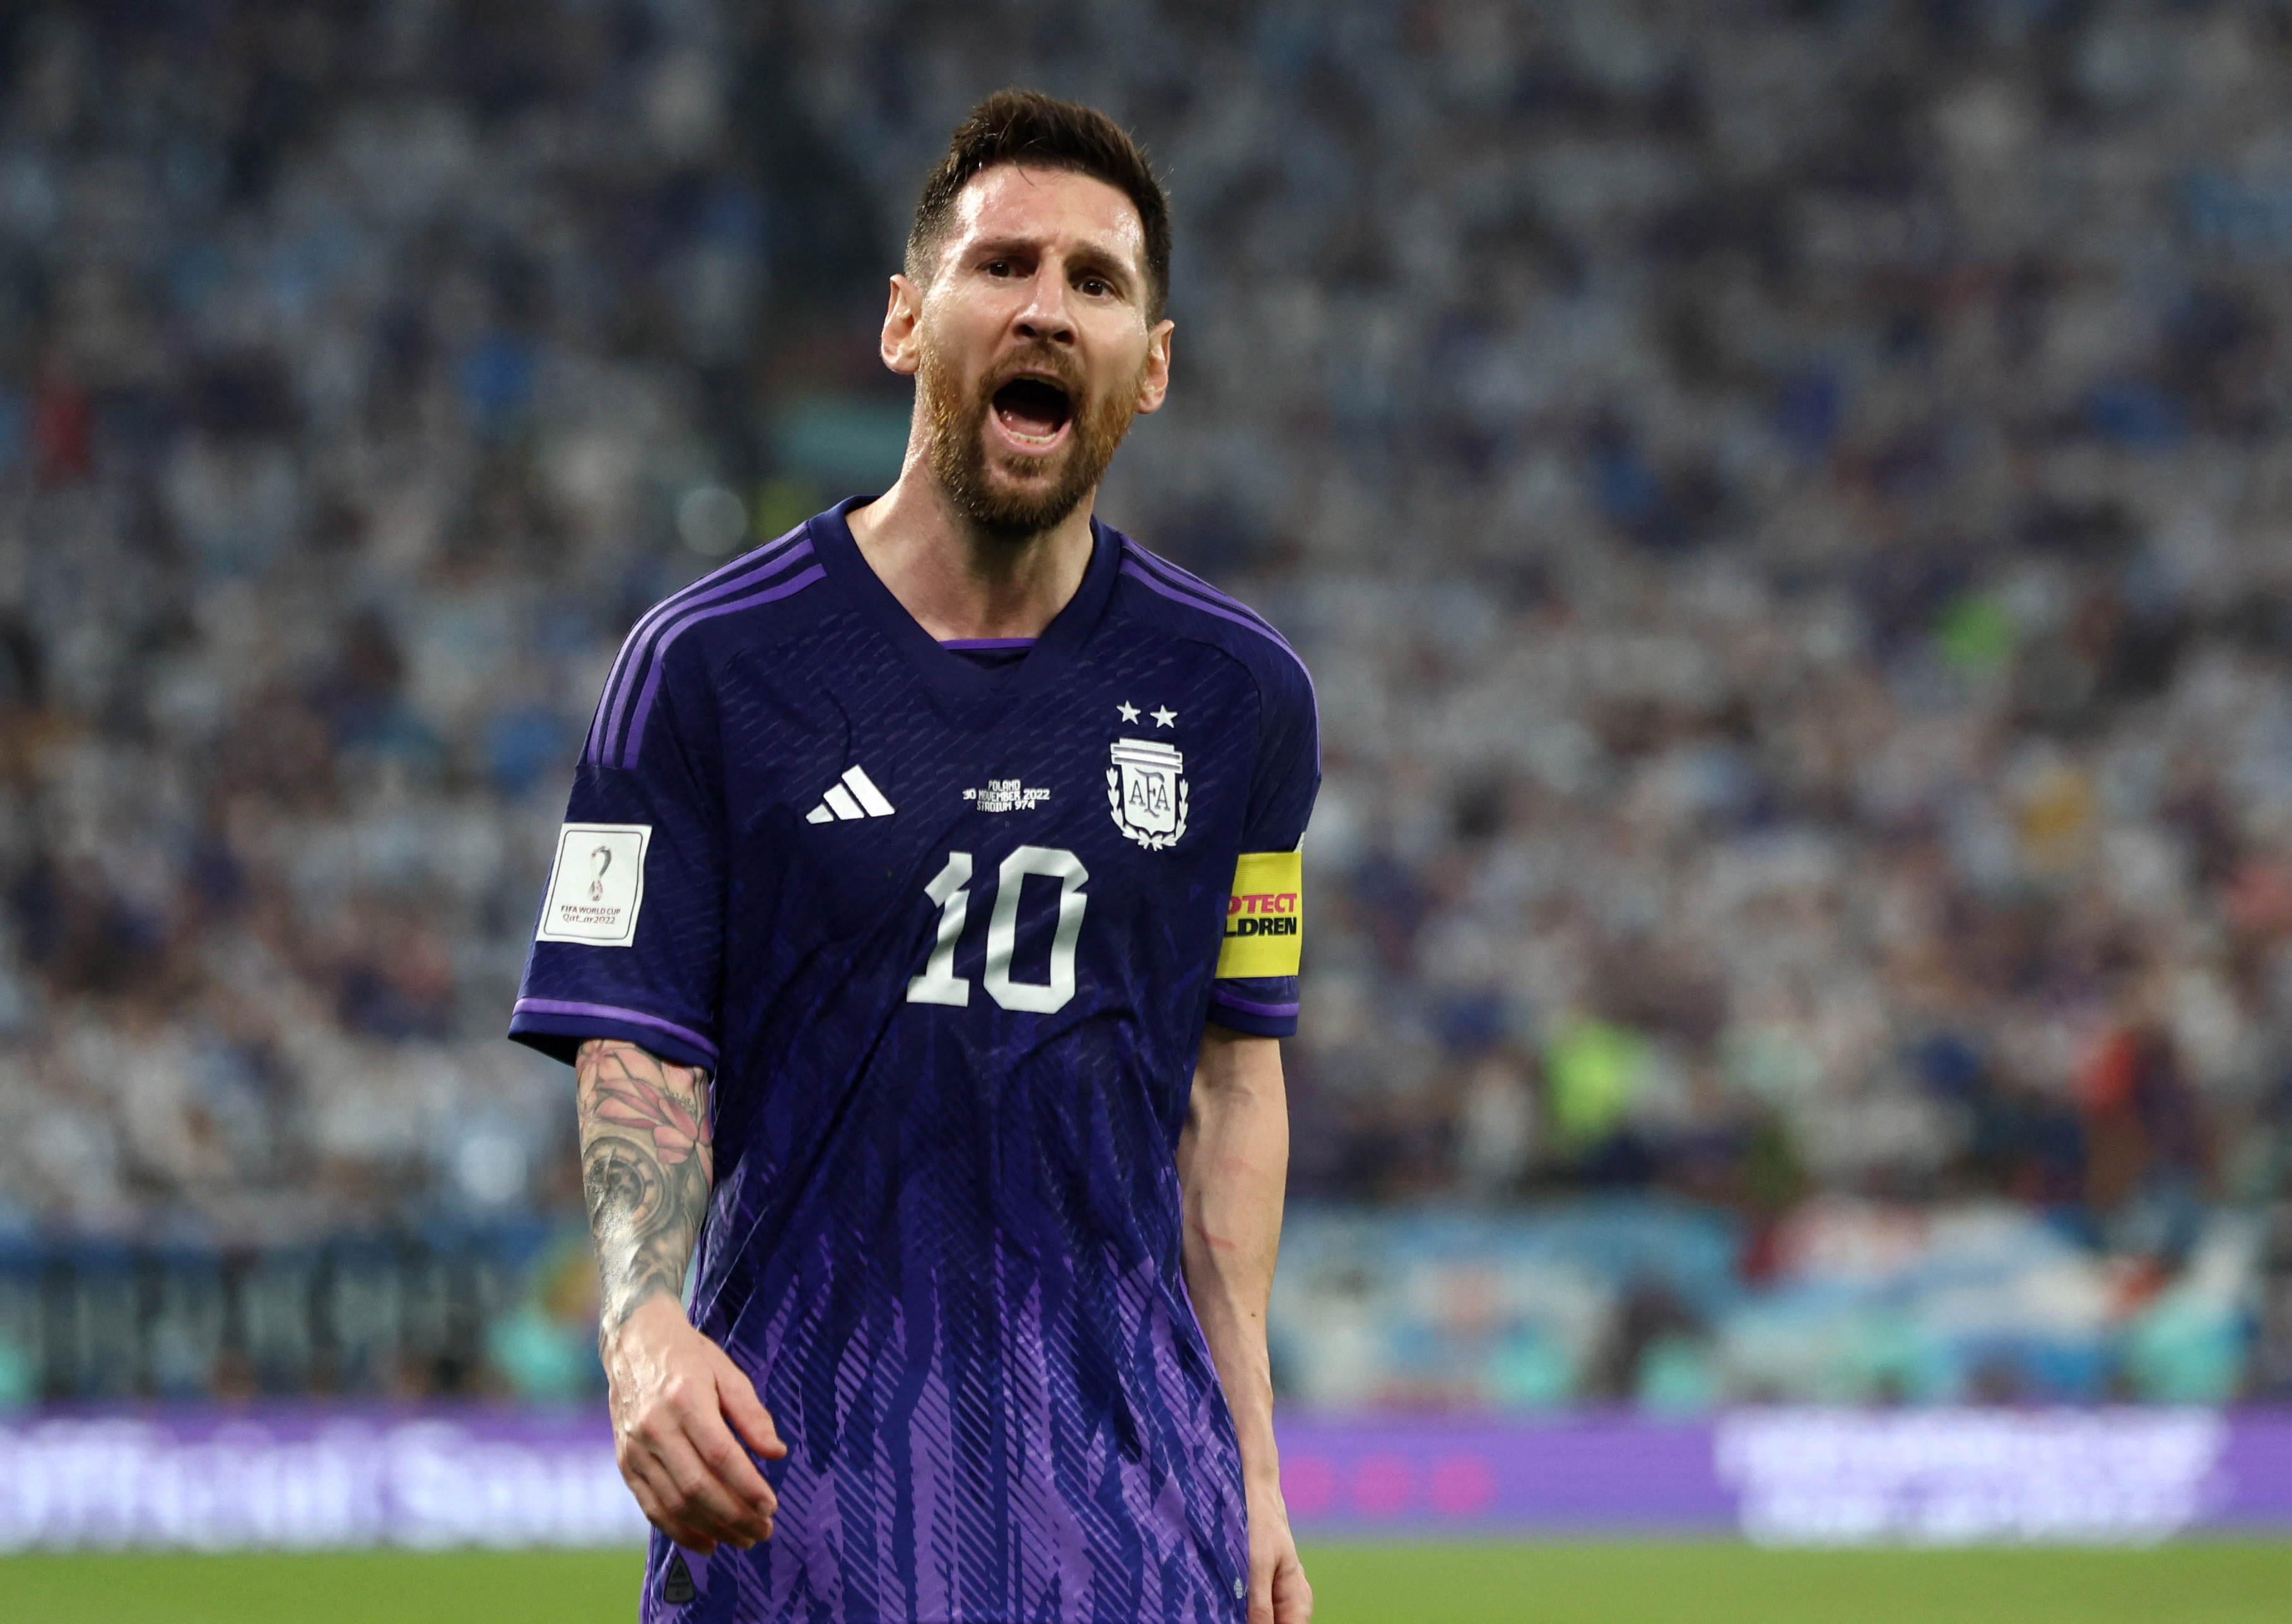 La bronca de Messi luego del penal. Foto: REUTERS/Pedro Nunes